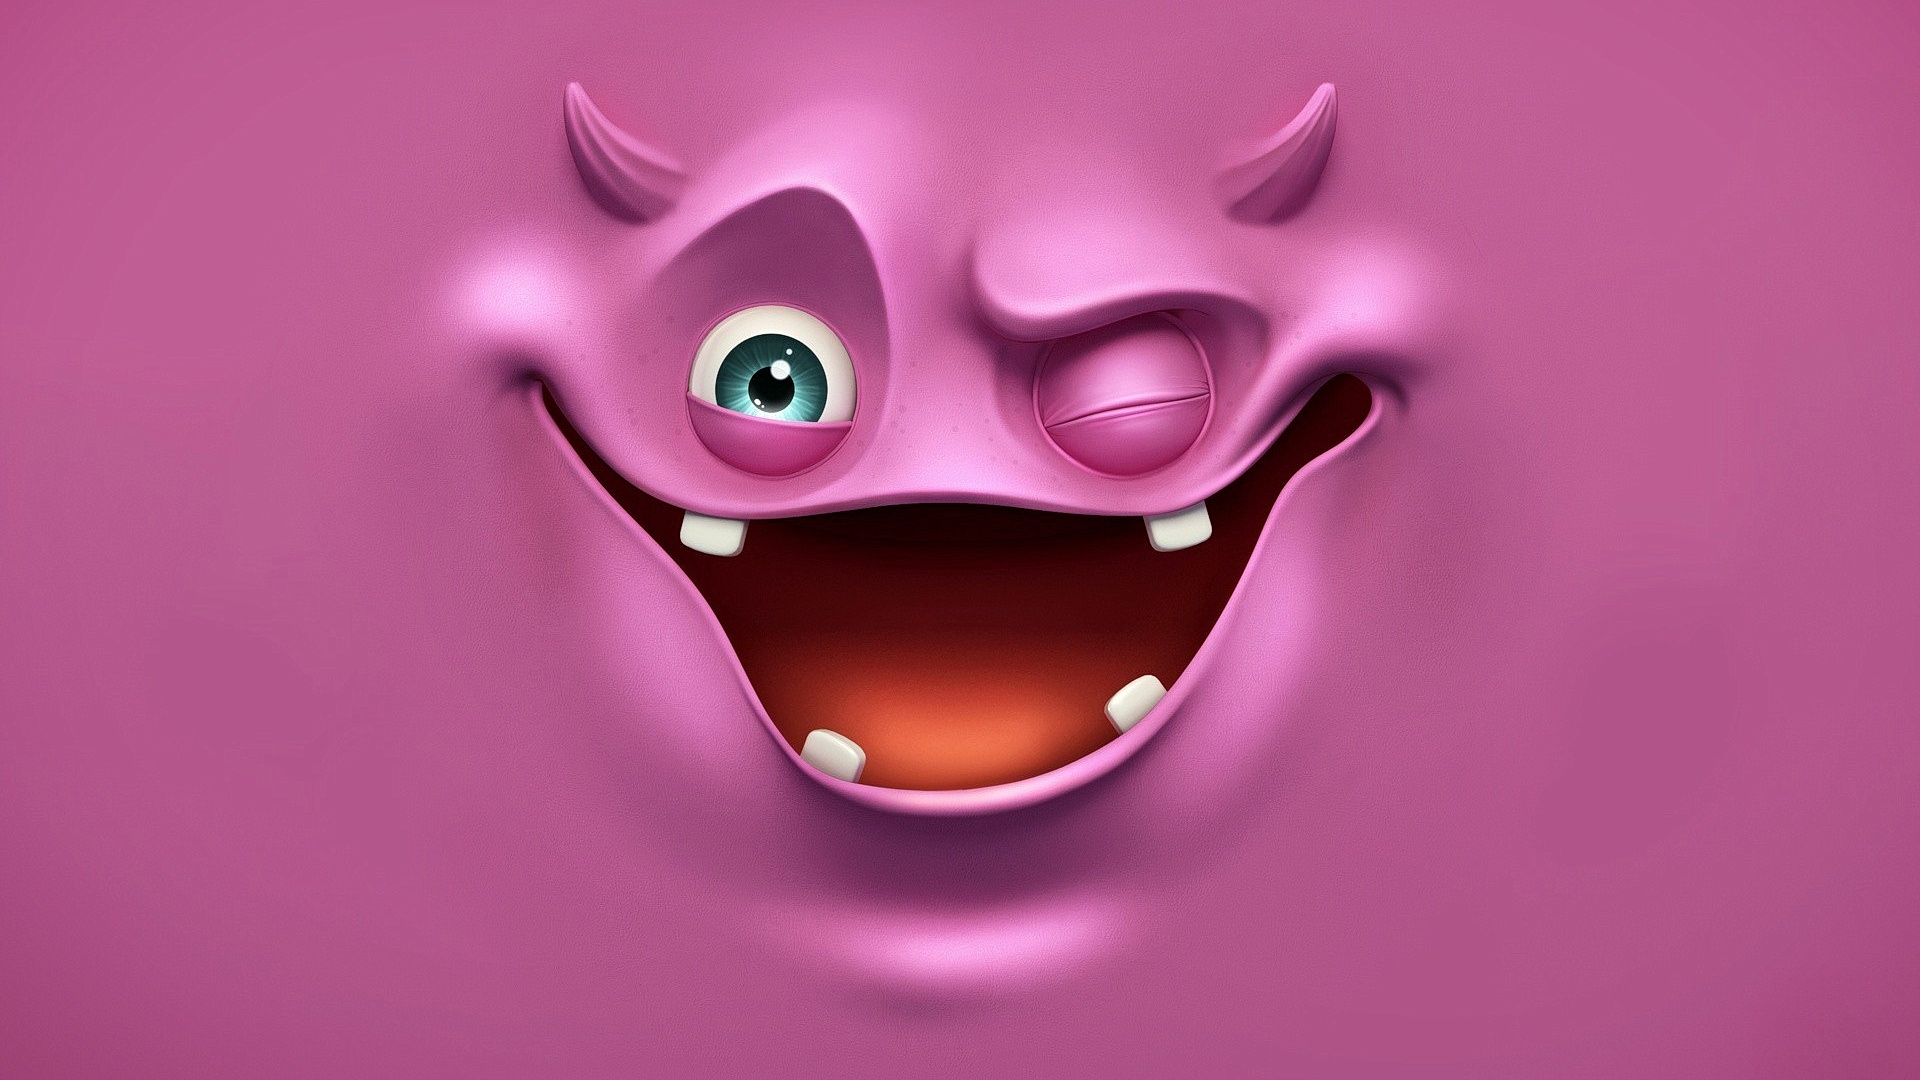 Бесплатное фото Лицо сказочного существа на розовом фоне